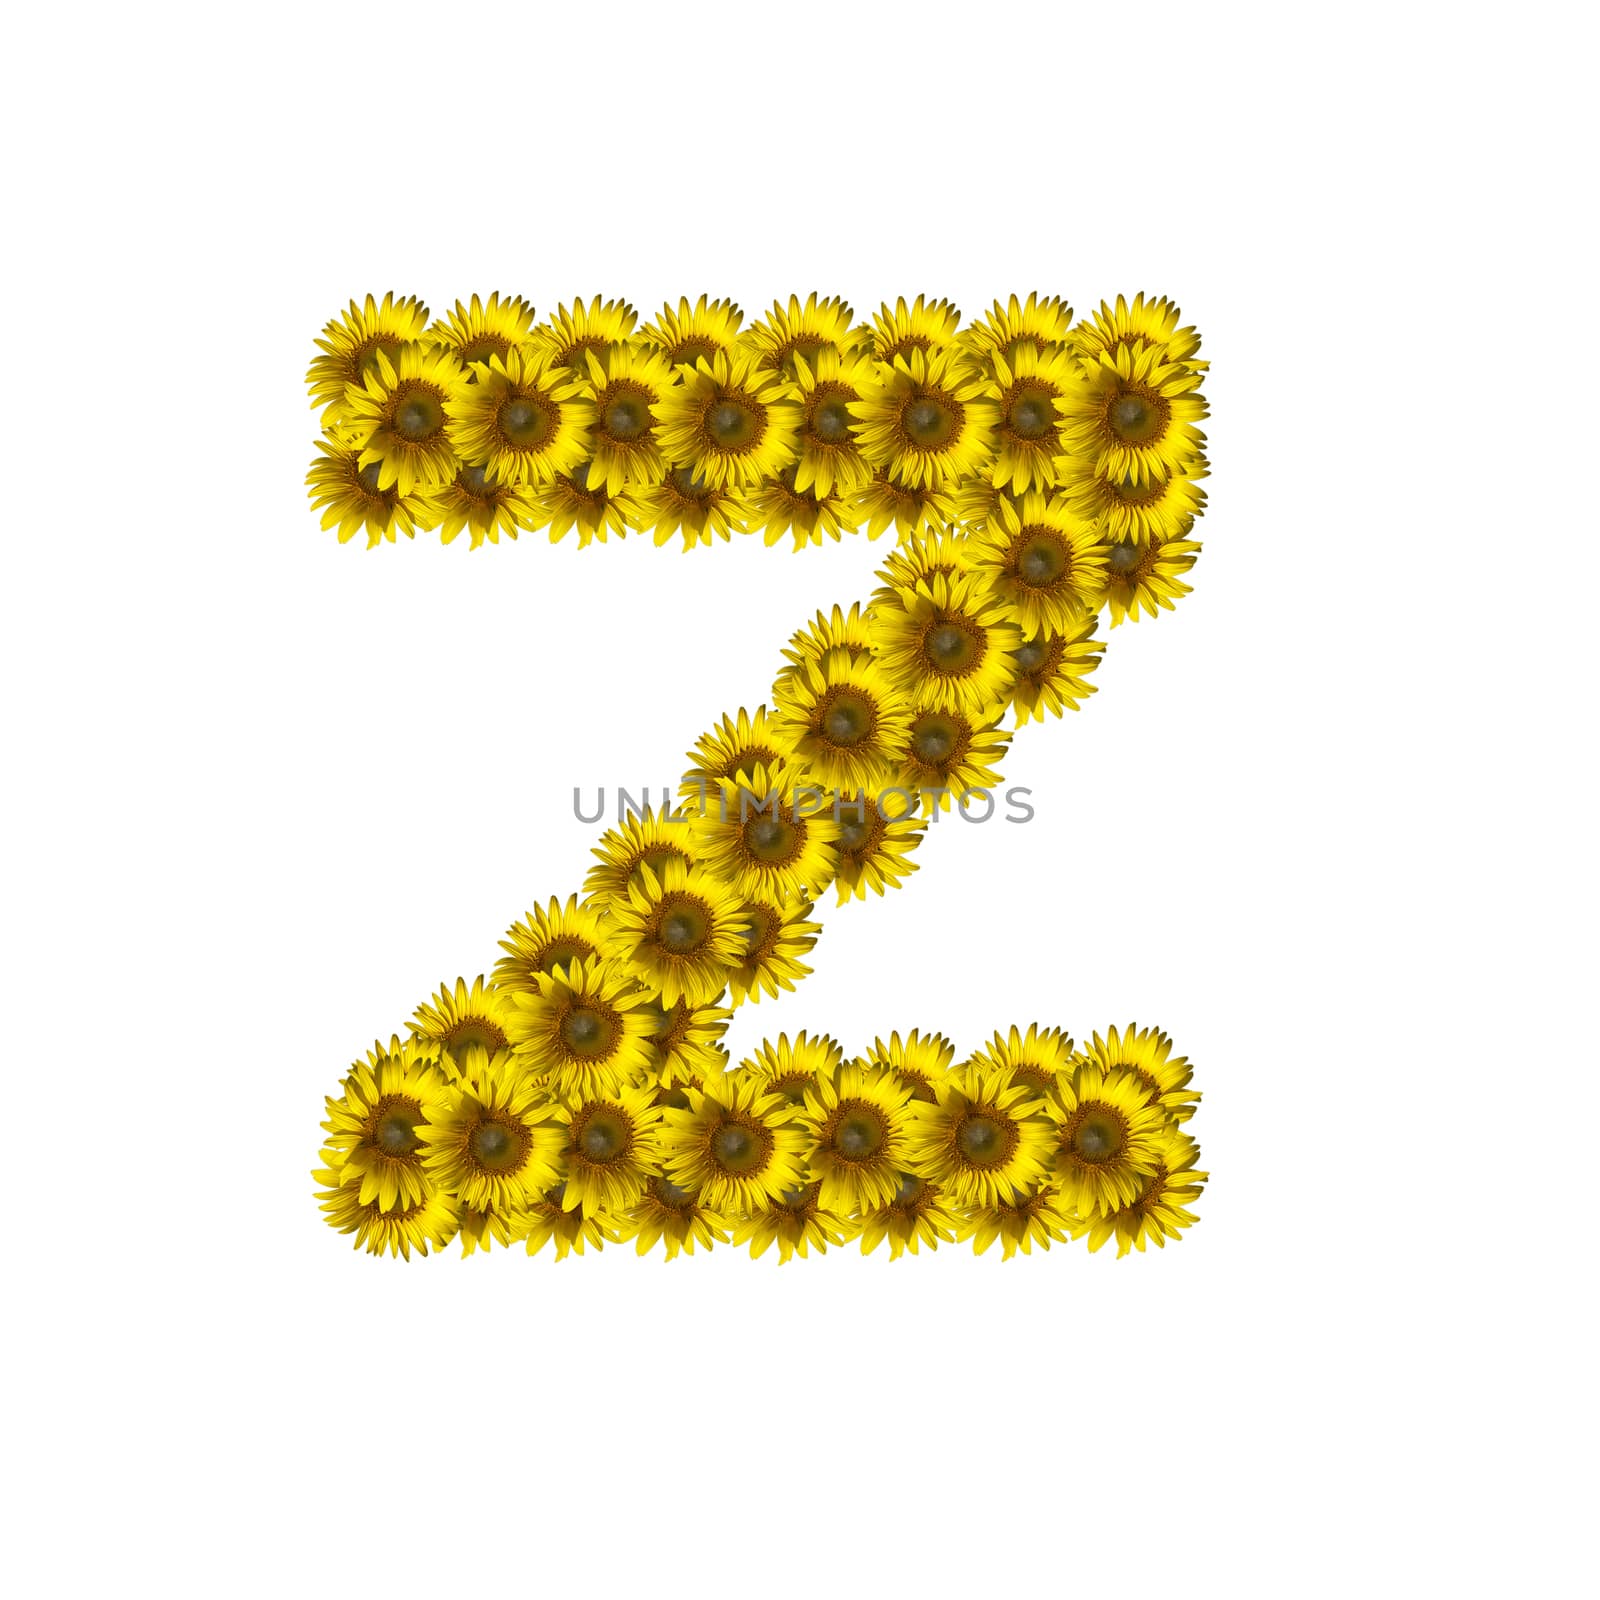 Isolated sunflower alphabet Z by Exsodus